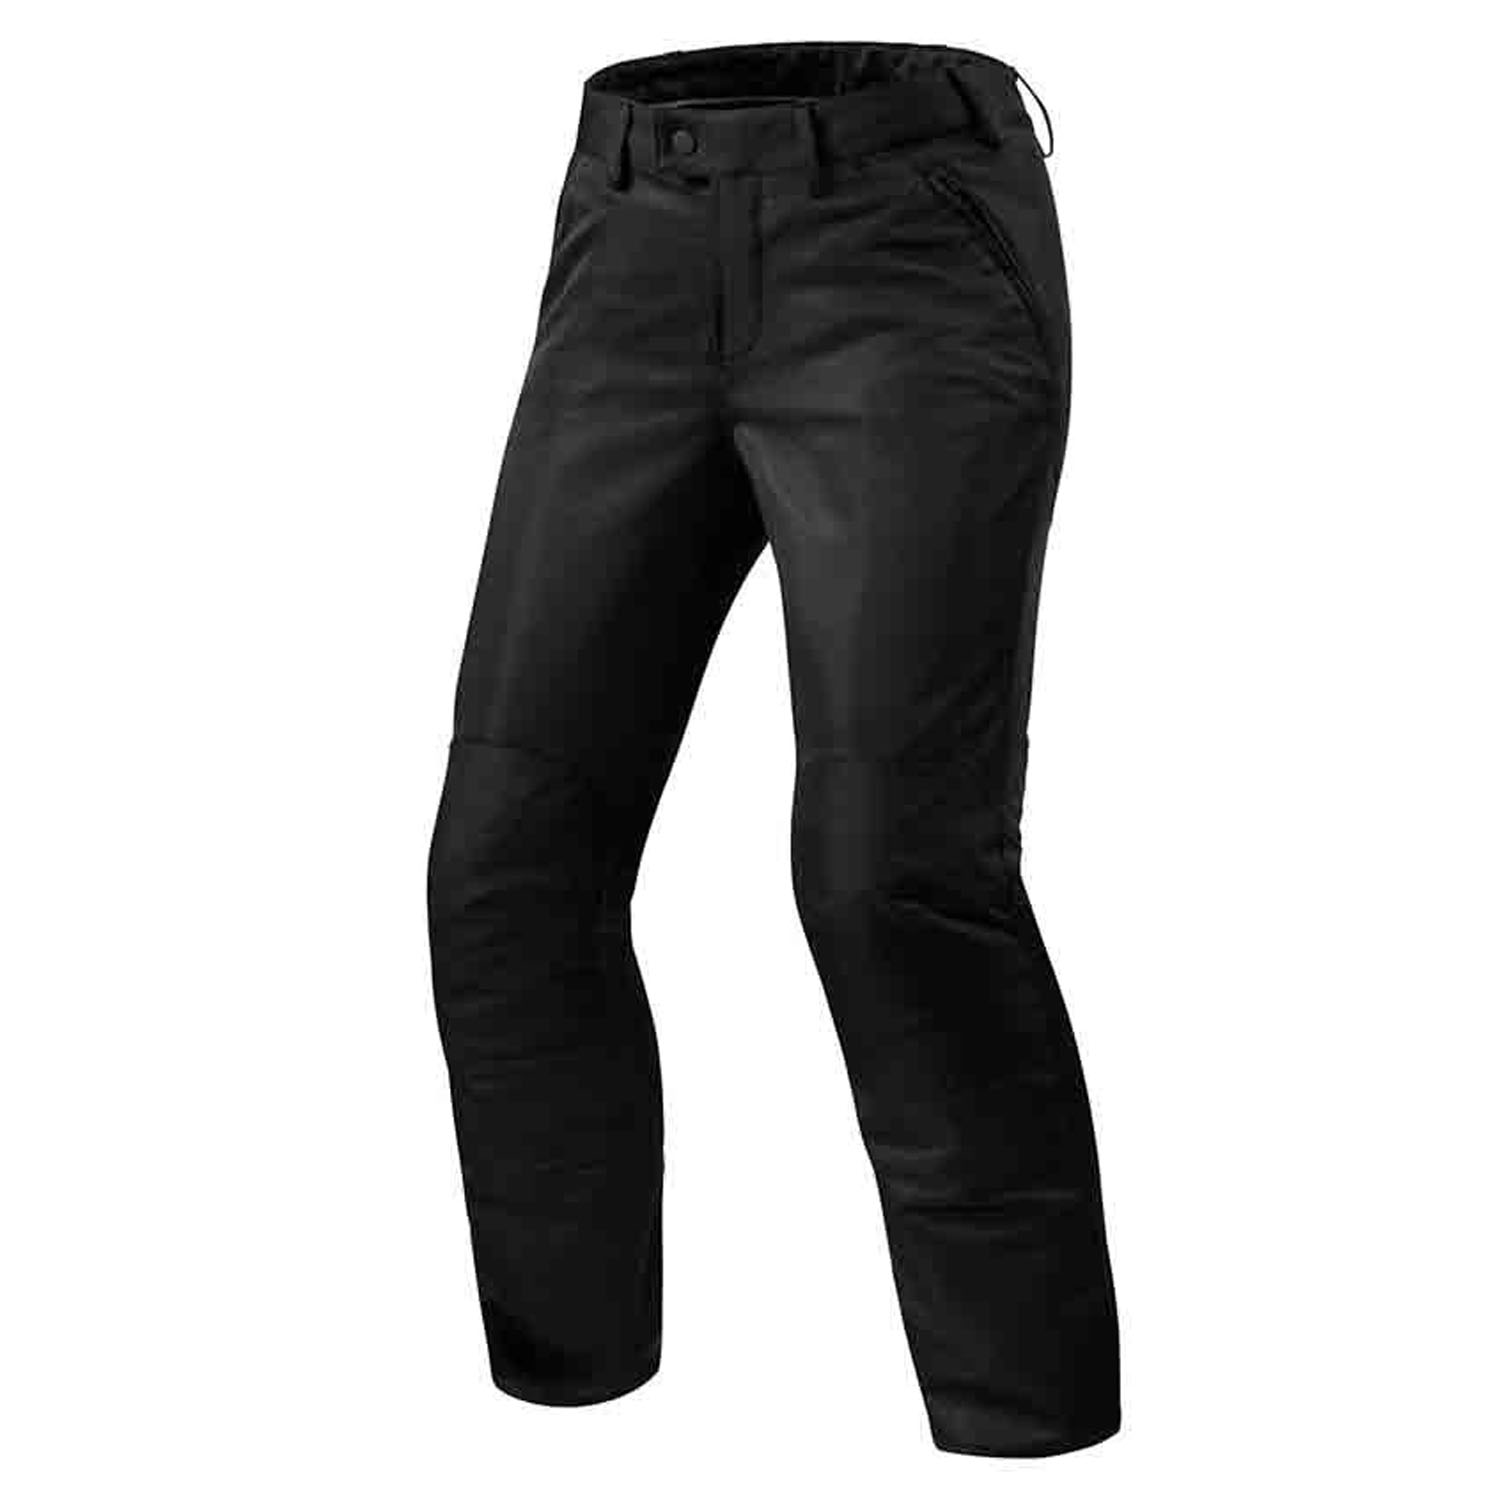 Image of REV'IT! Eclipse 2 Ladies Black Long Motorcycle Pants Size 36 EN